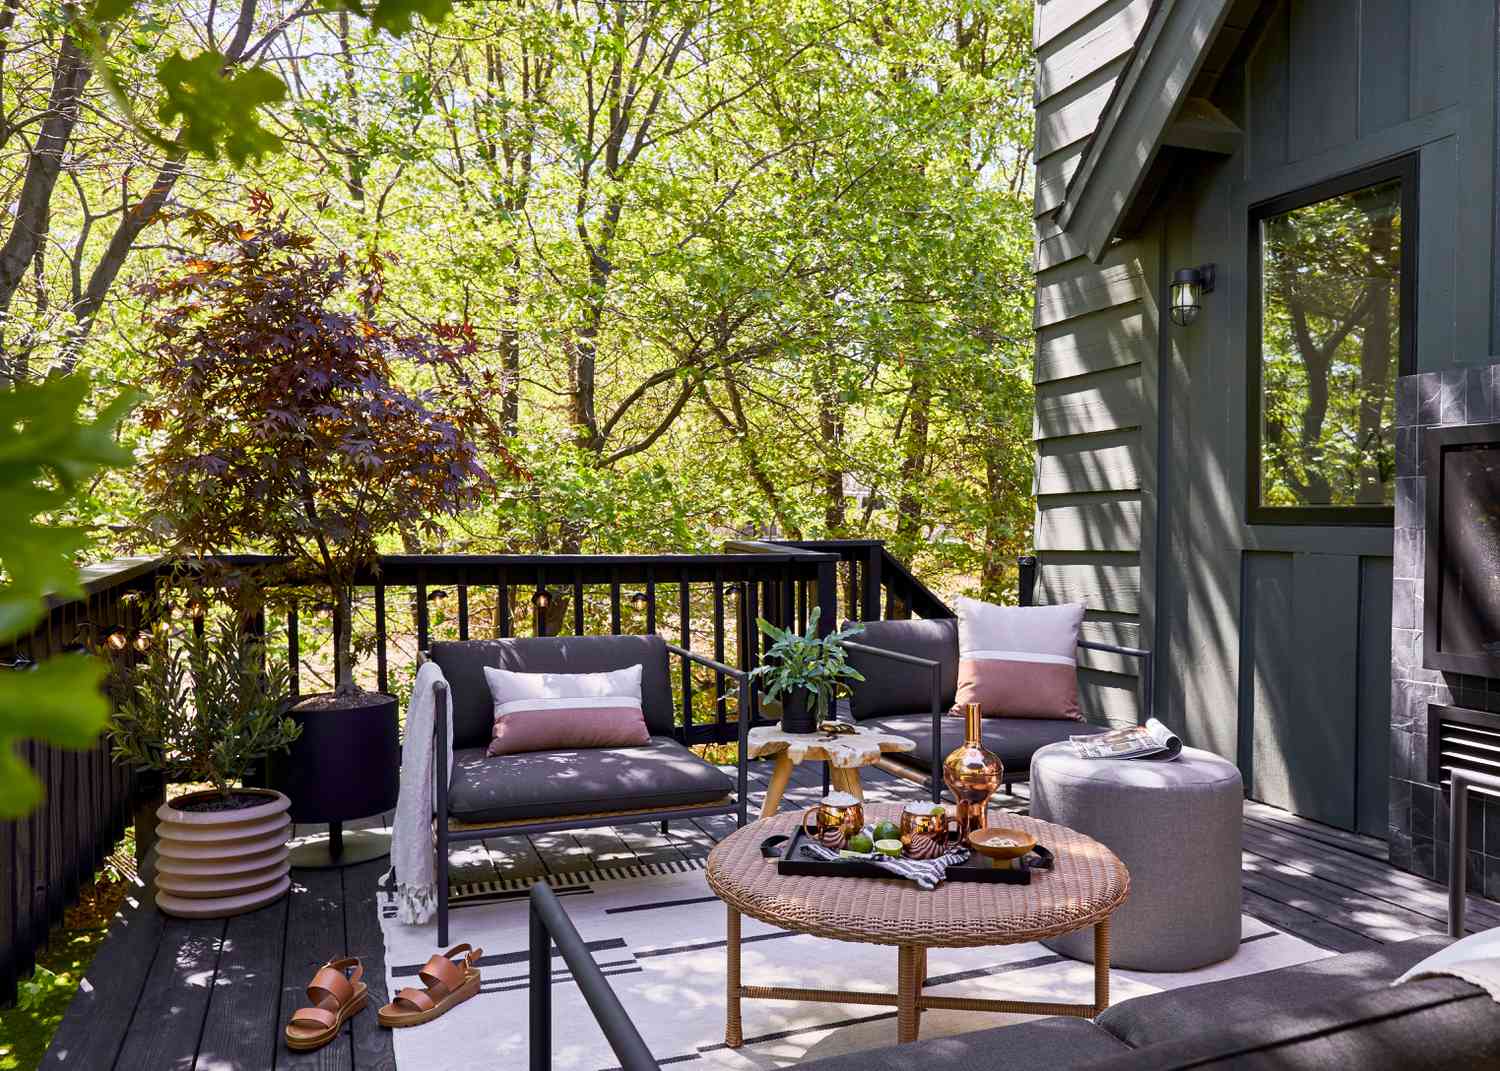 Designate an Outdoor Living Room